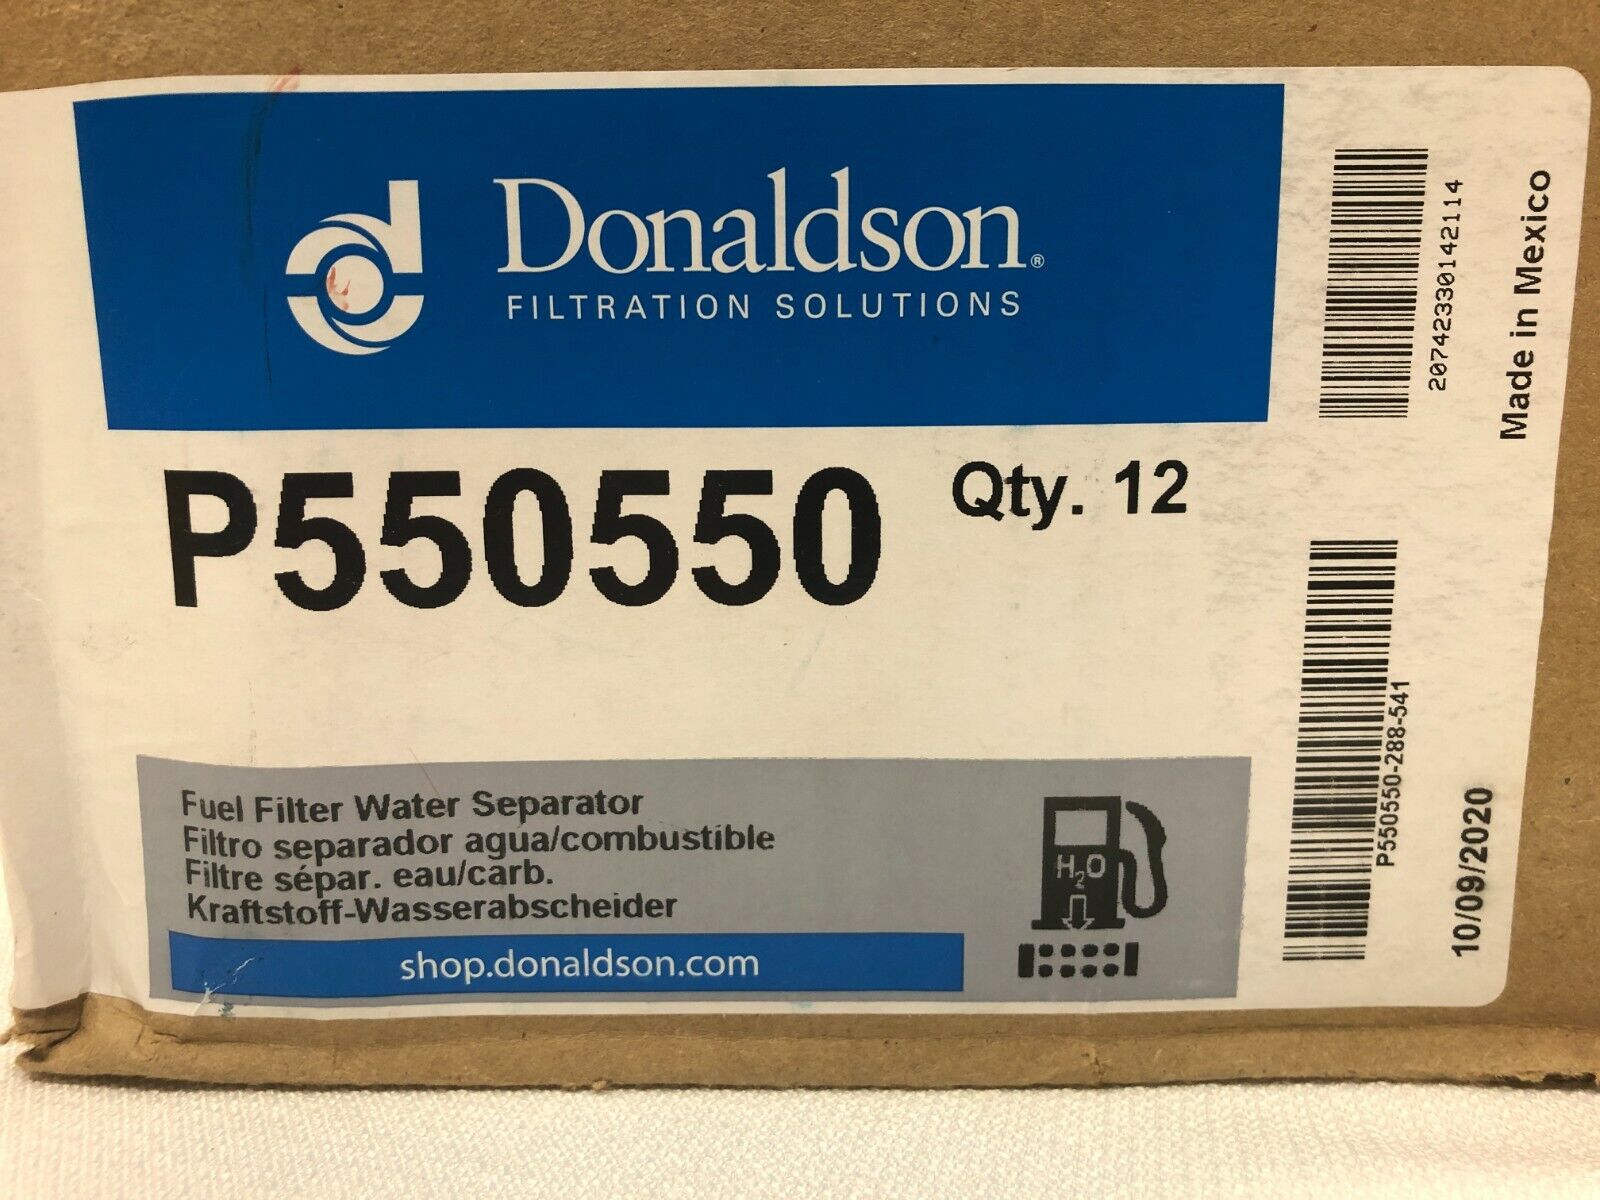 Donaldson Fuel Filter Water Separator Case of 12 - P550550